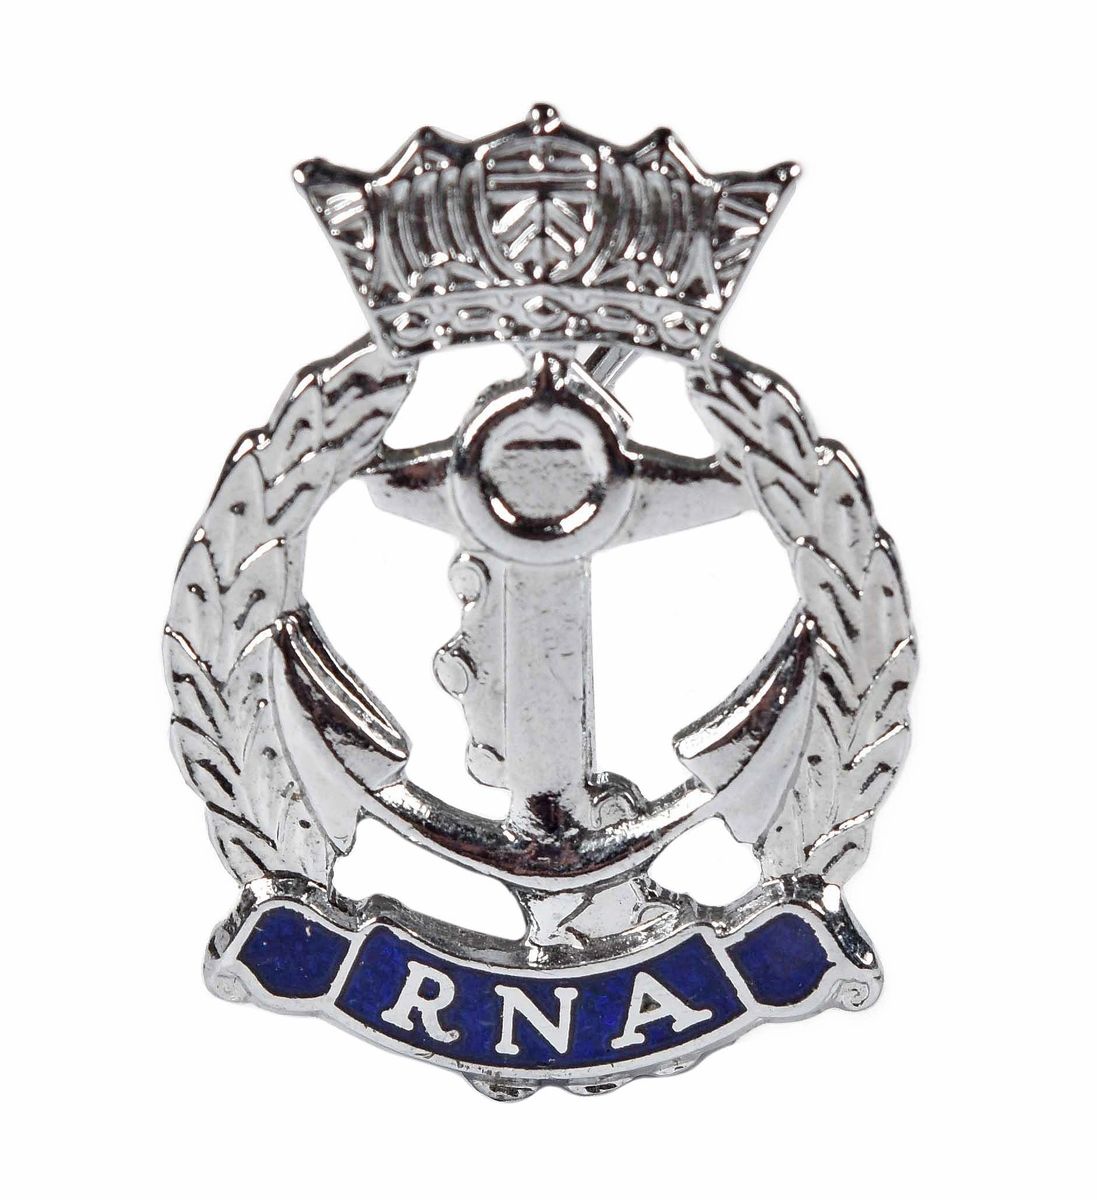 The Royal Naval Navy Association RNA Members Enamel Badge